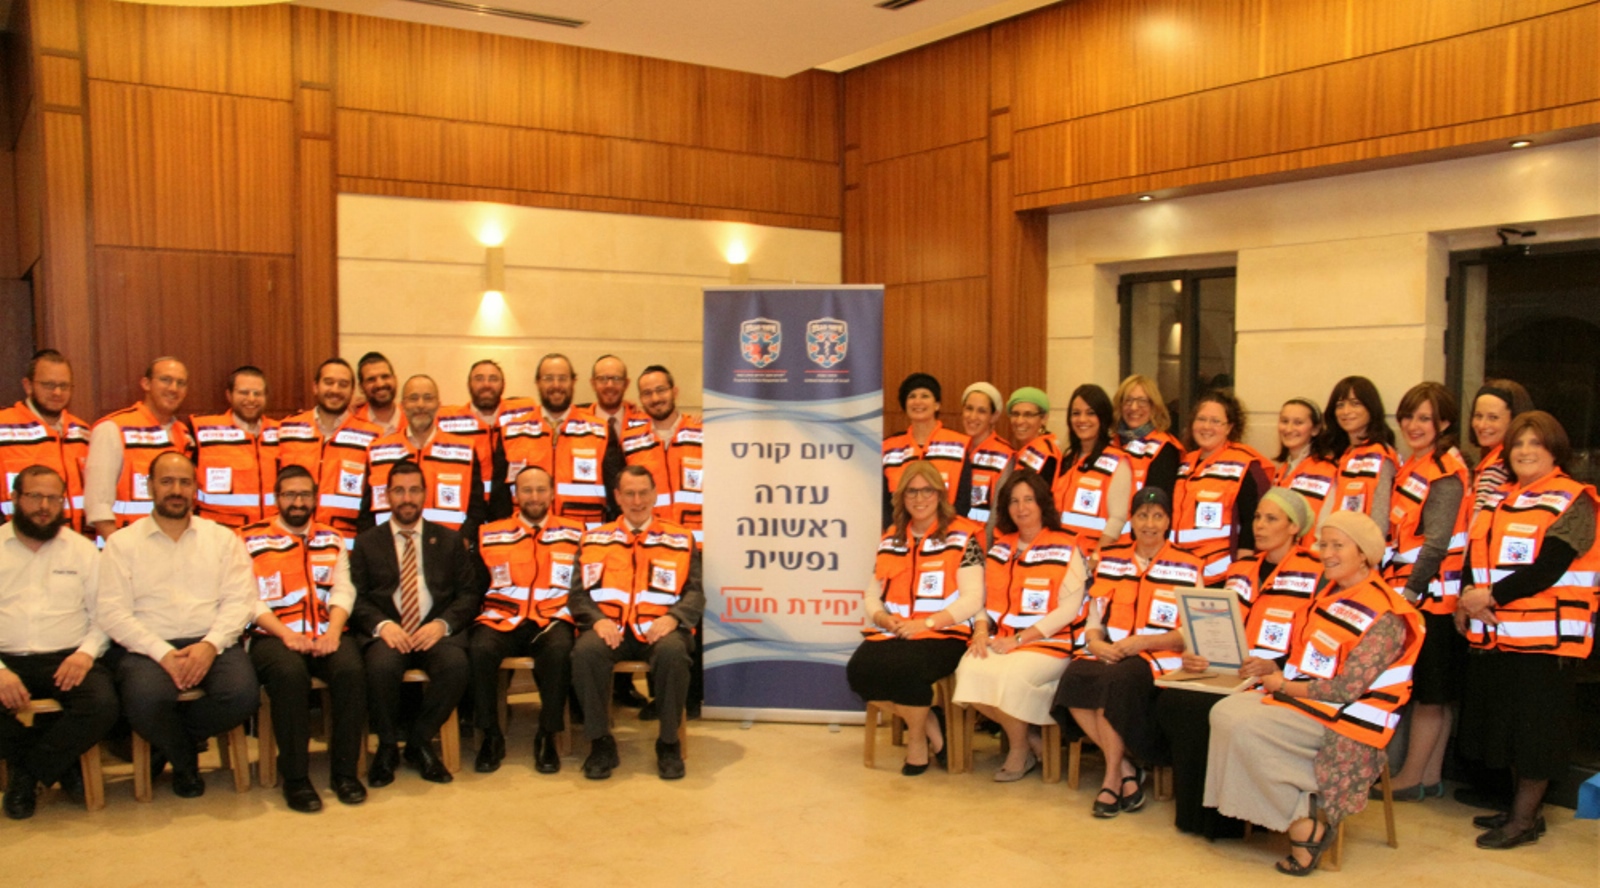 Firat graduating class of United Hatzalah’s psychotrauma unit. Photo: courtesy